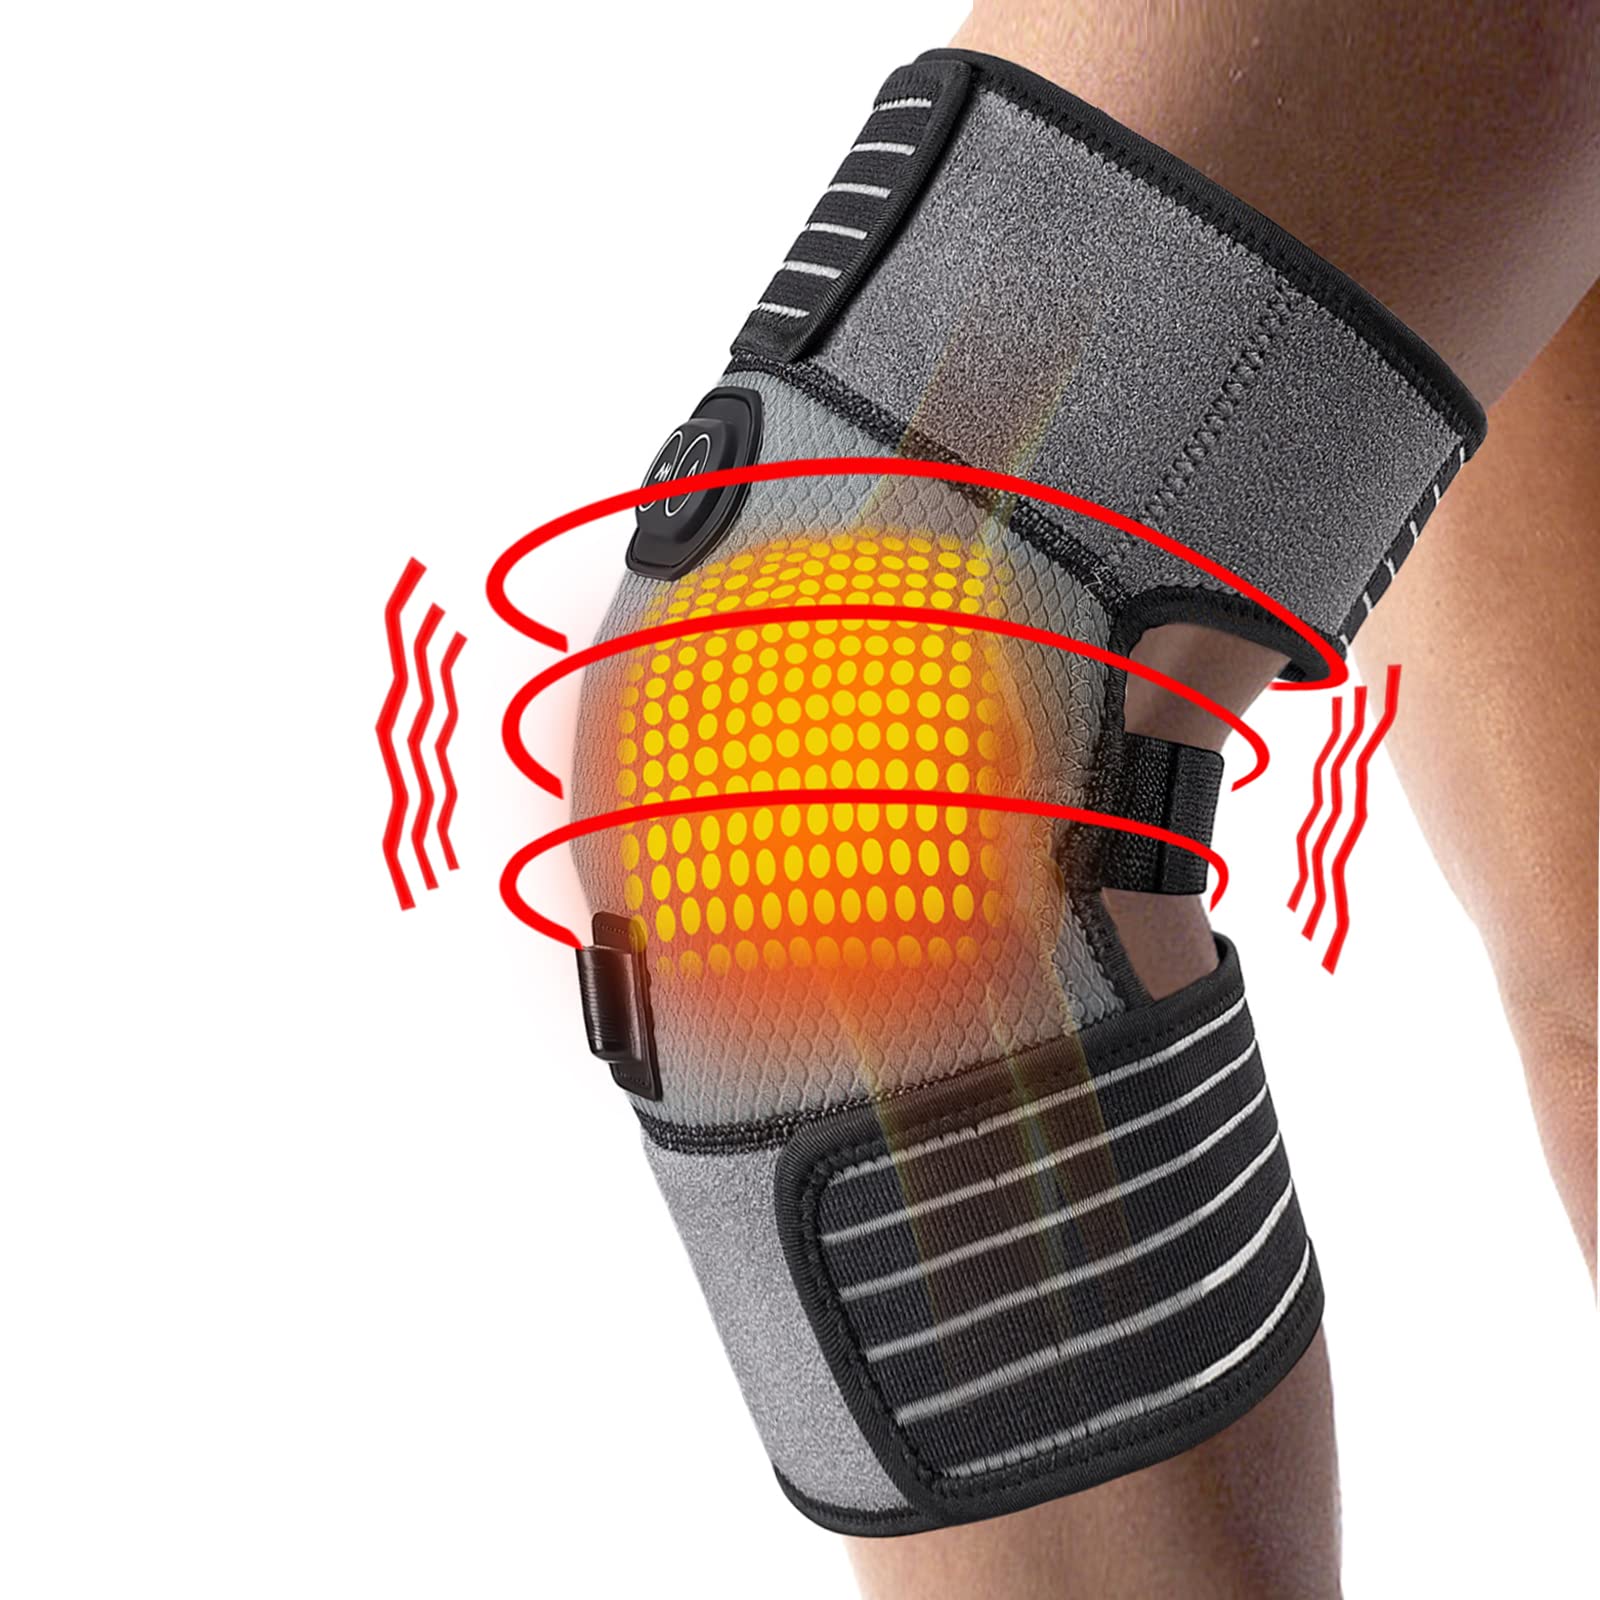 Heated Knee Brace Wrap Knee Heating Pad for Arthritis Pain Relief